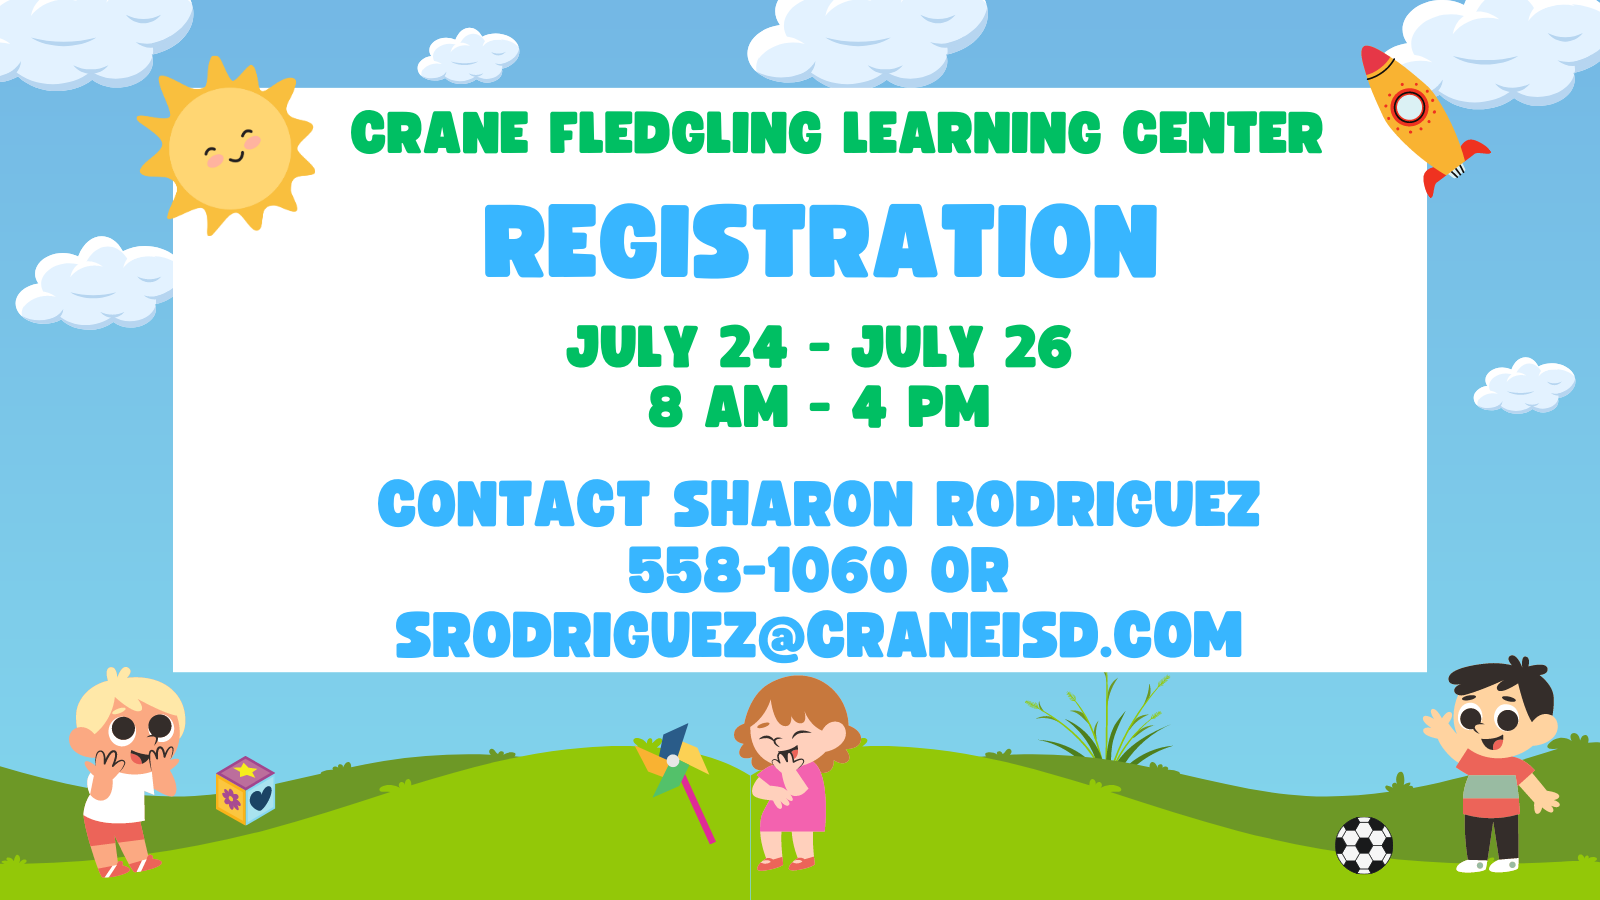 Crane Fledgling Learning Center Registration  July 24 - July 26 8 AM - 4 PM Contact Sharon Rodriguez 558-1060 or srodriguez@craneisd.com